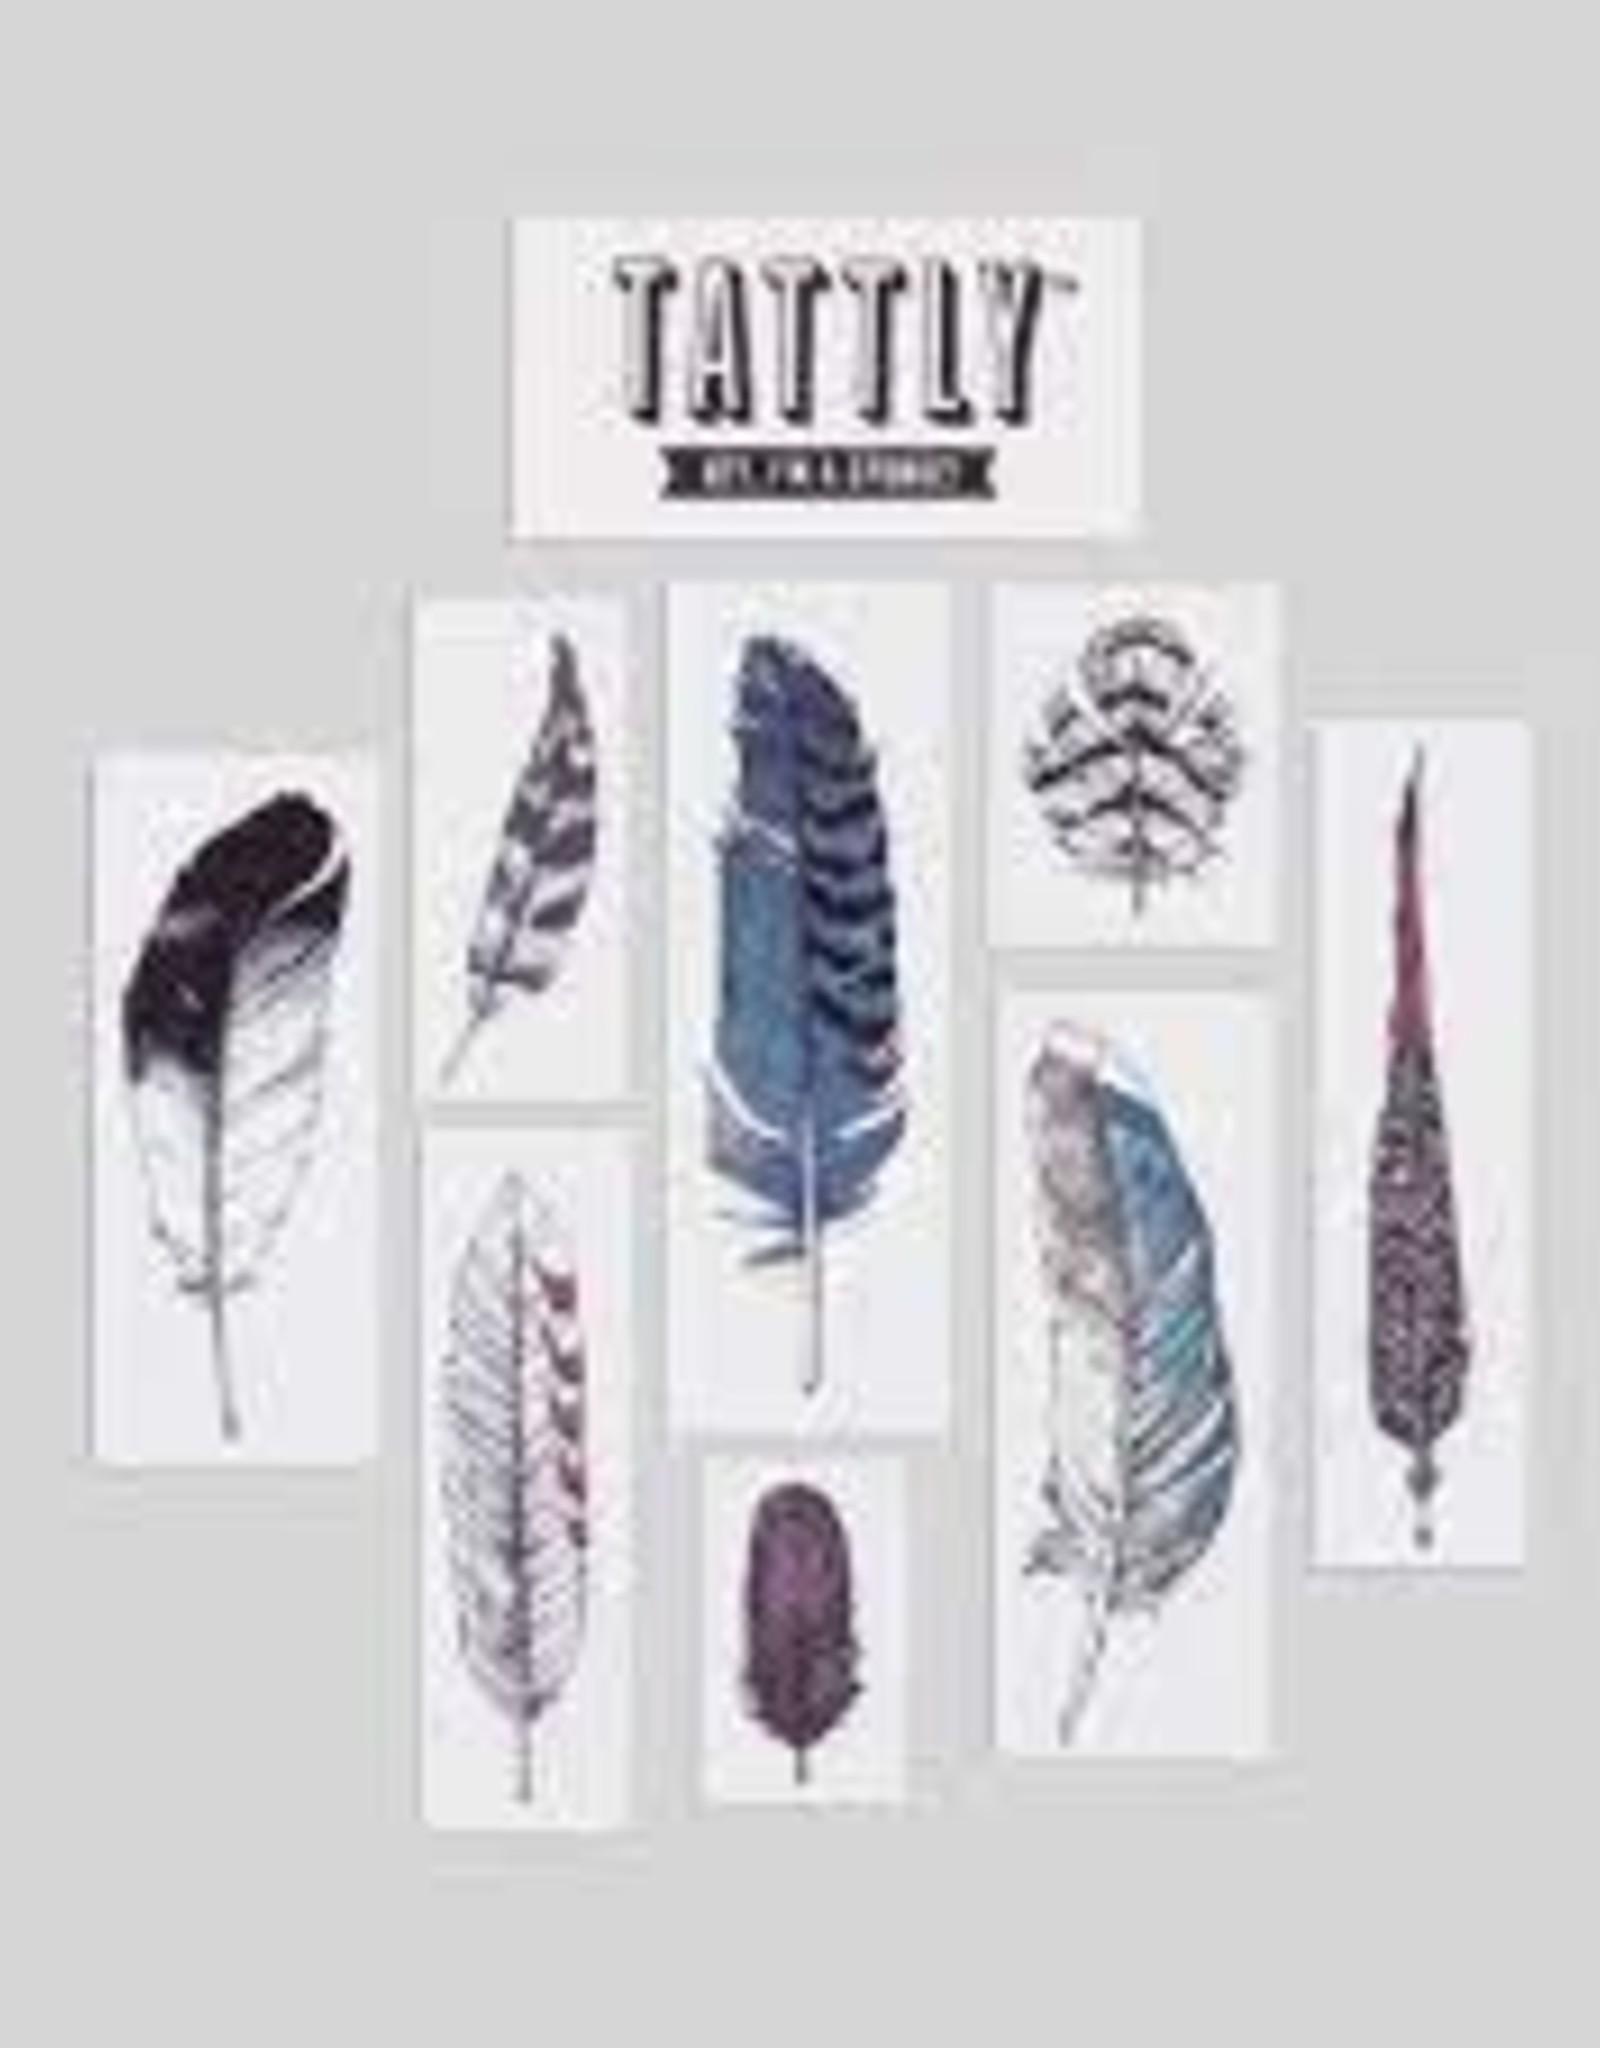 Tattly Blue Jay Feather Tattoo Pair